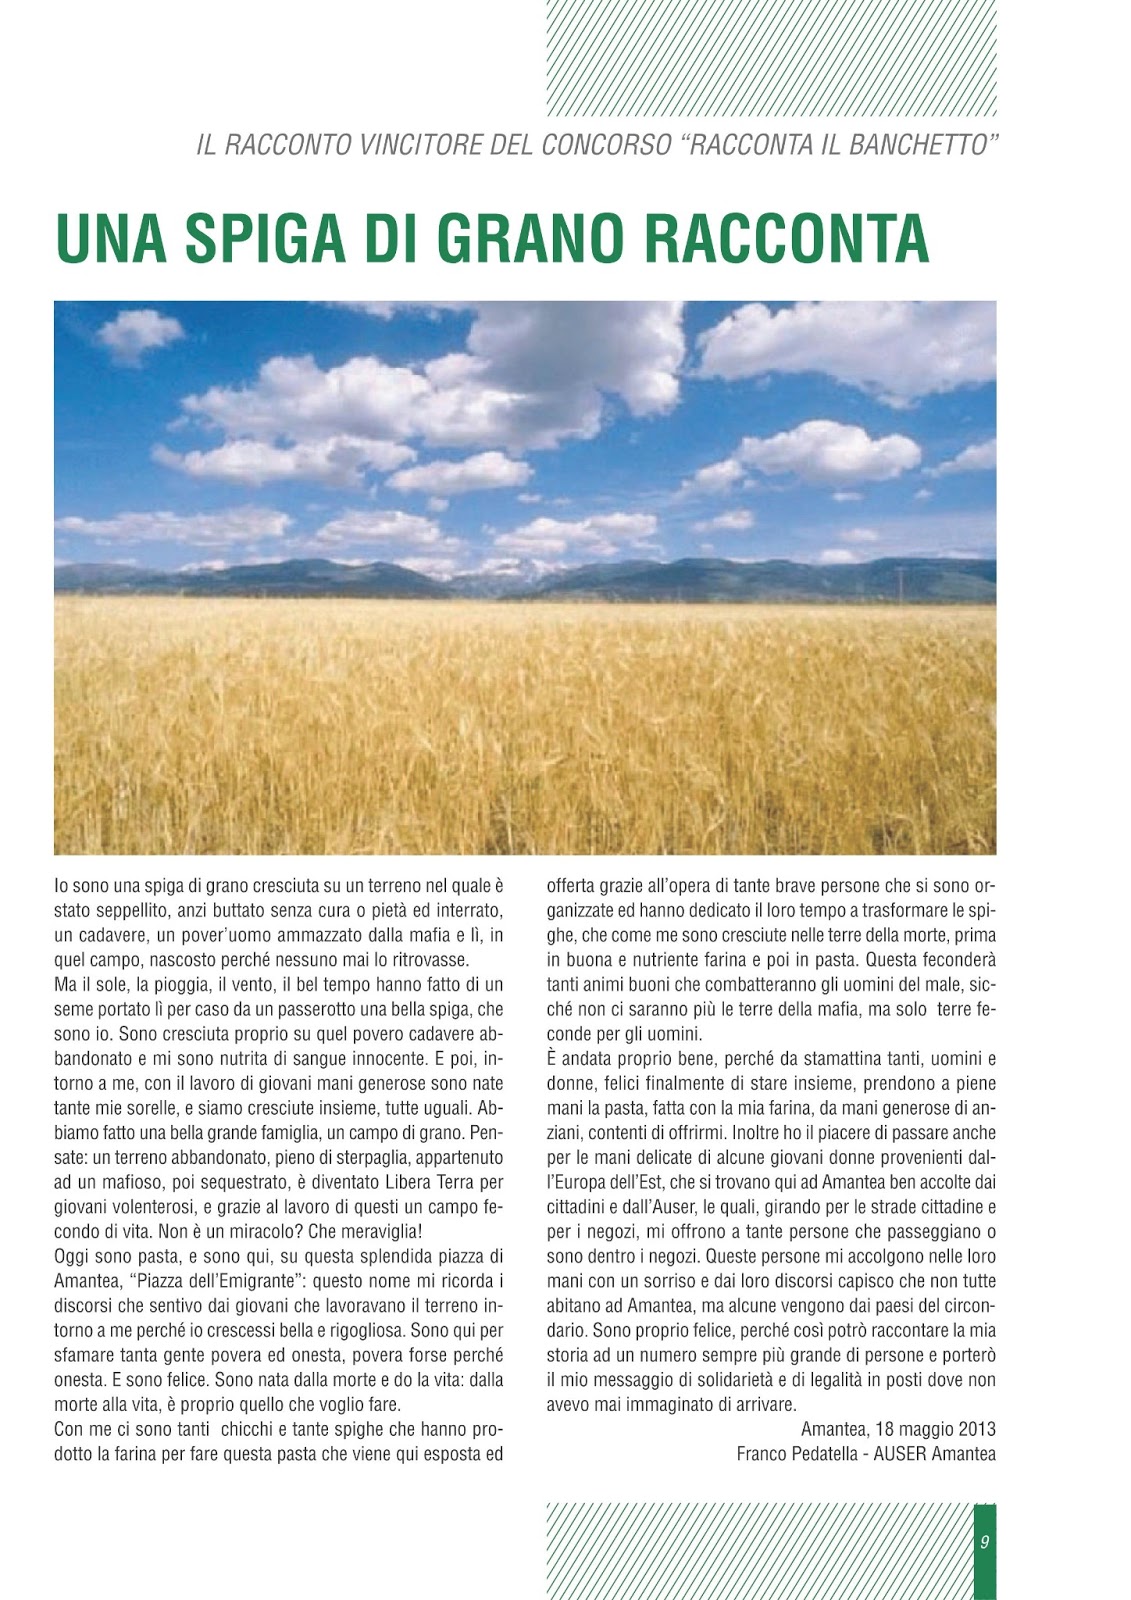 Thumbnail image for /public/upload/2013/7/635087256578724633_Una spiga di grano racconta.jpg